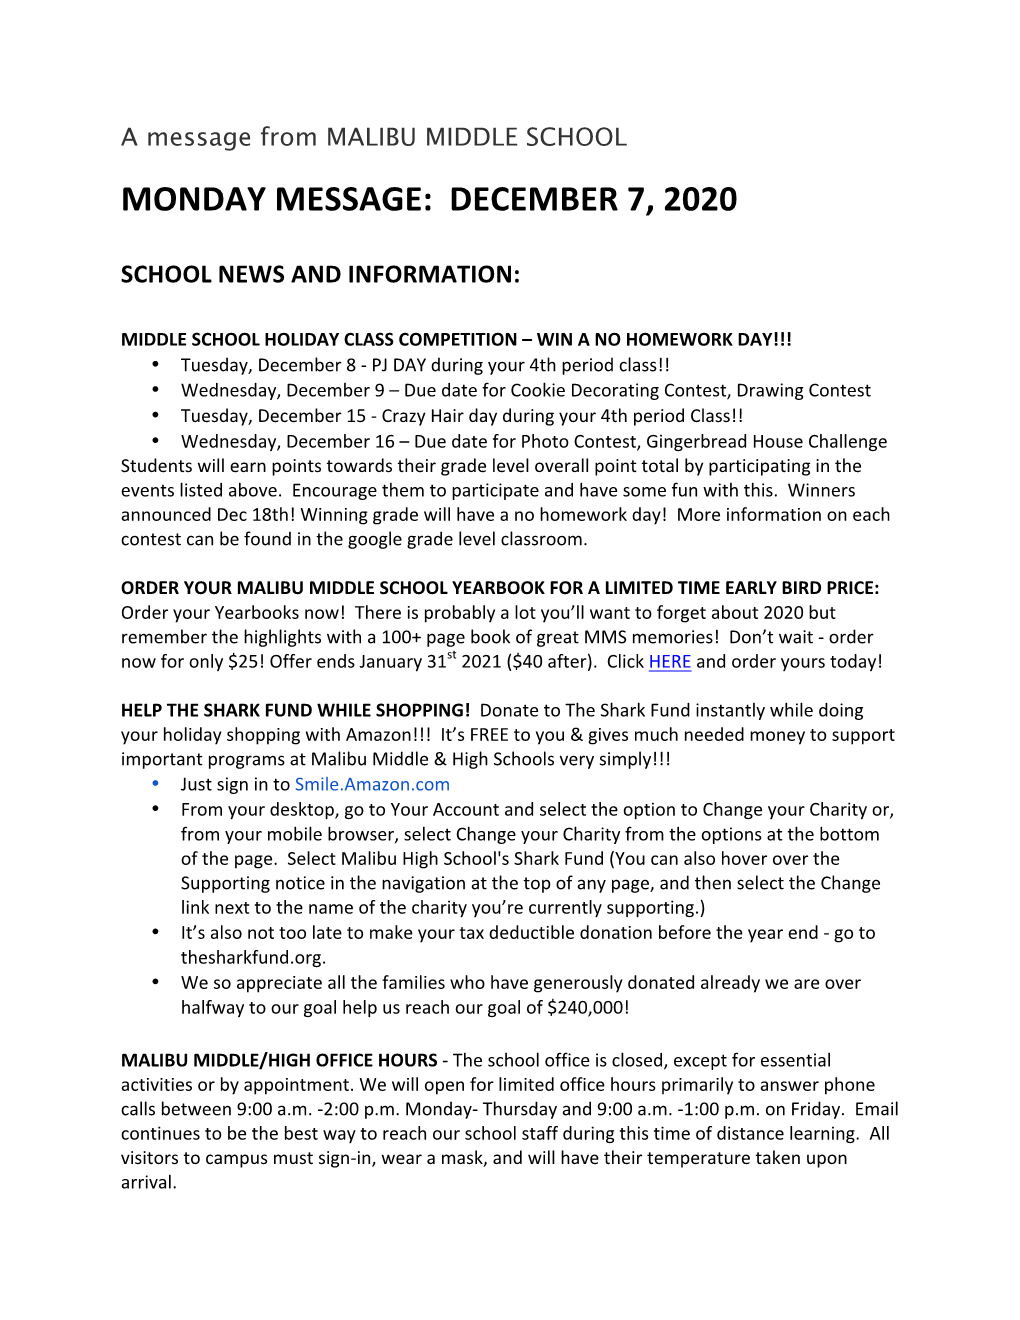 Monday Message: December 7, 2020